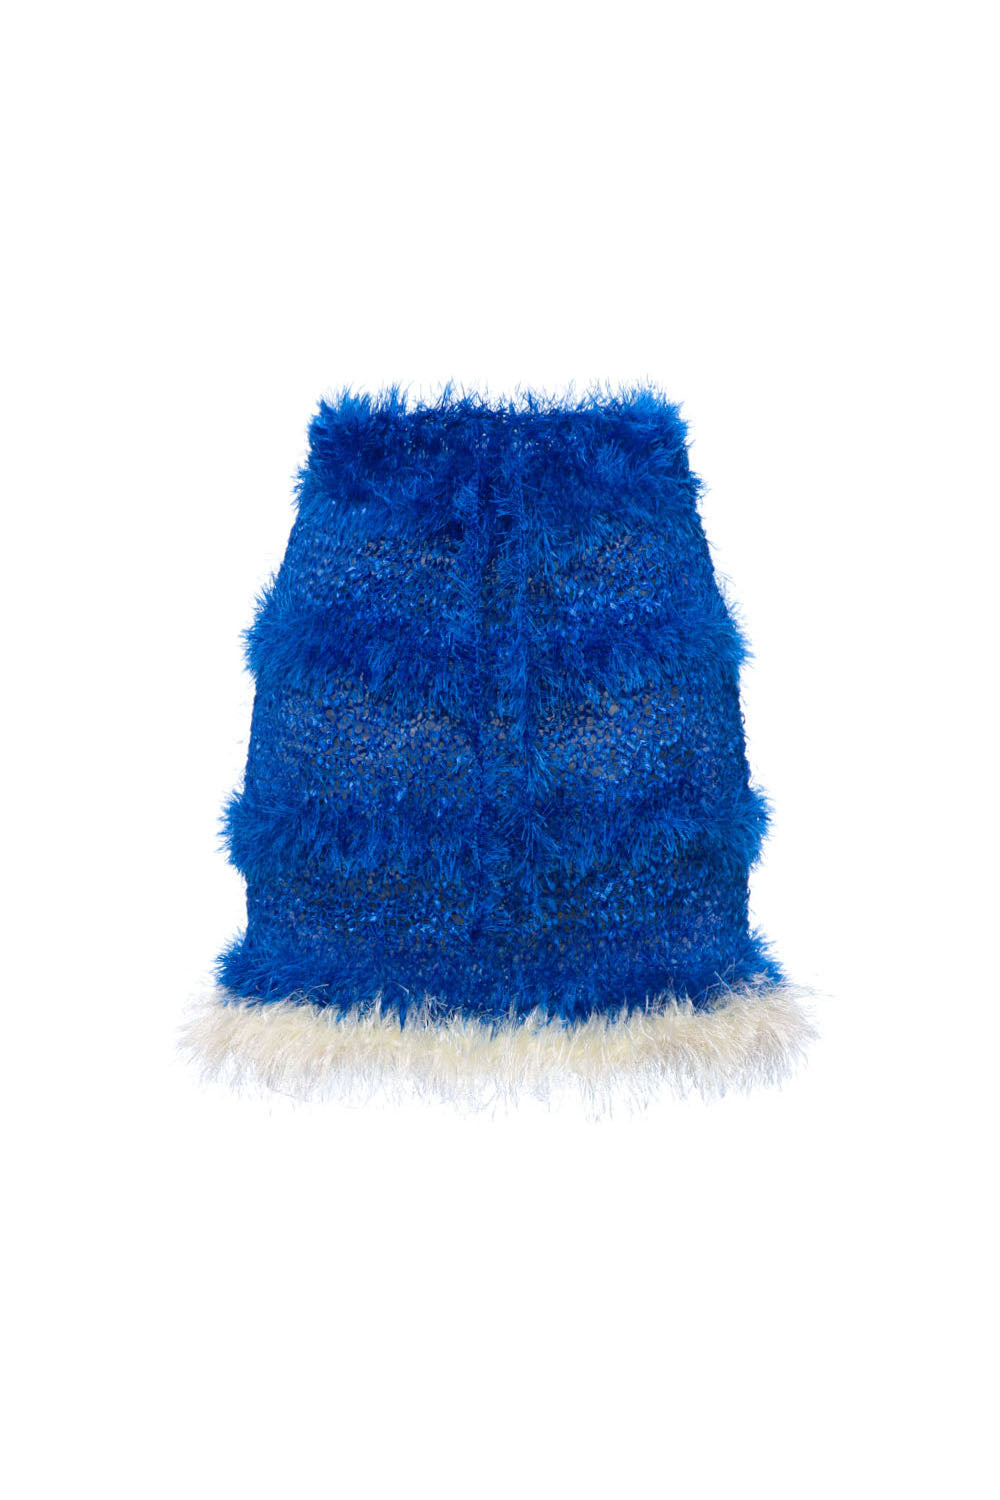 Shop Andreeva Women's Classic Blue Handmade Knit Skirt